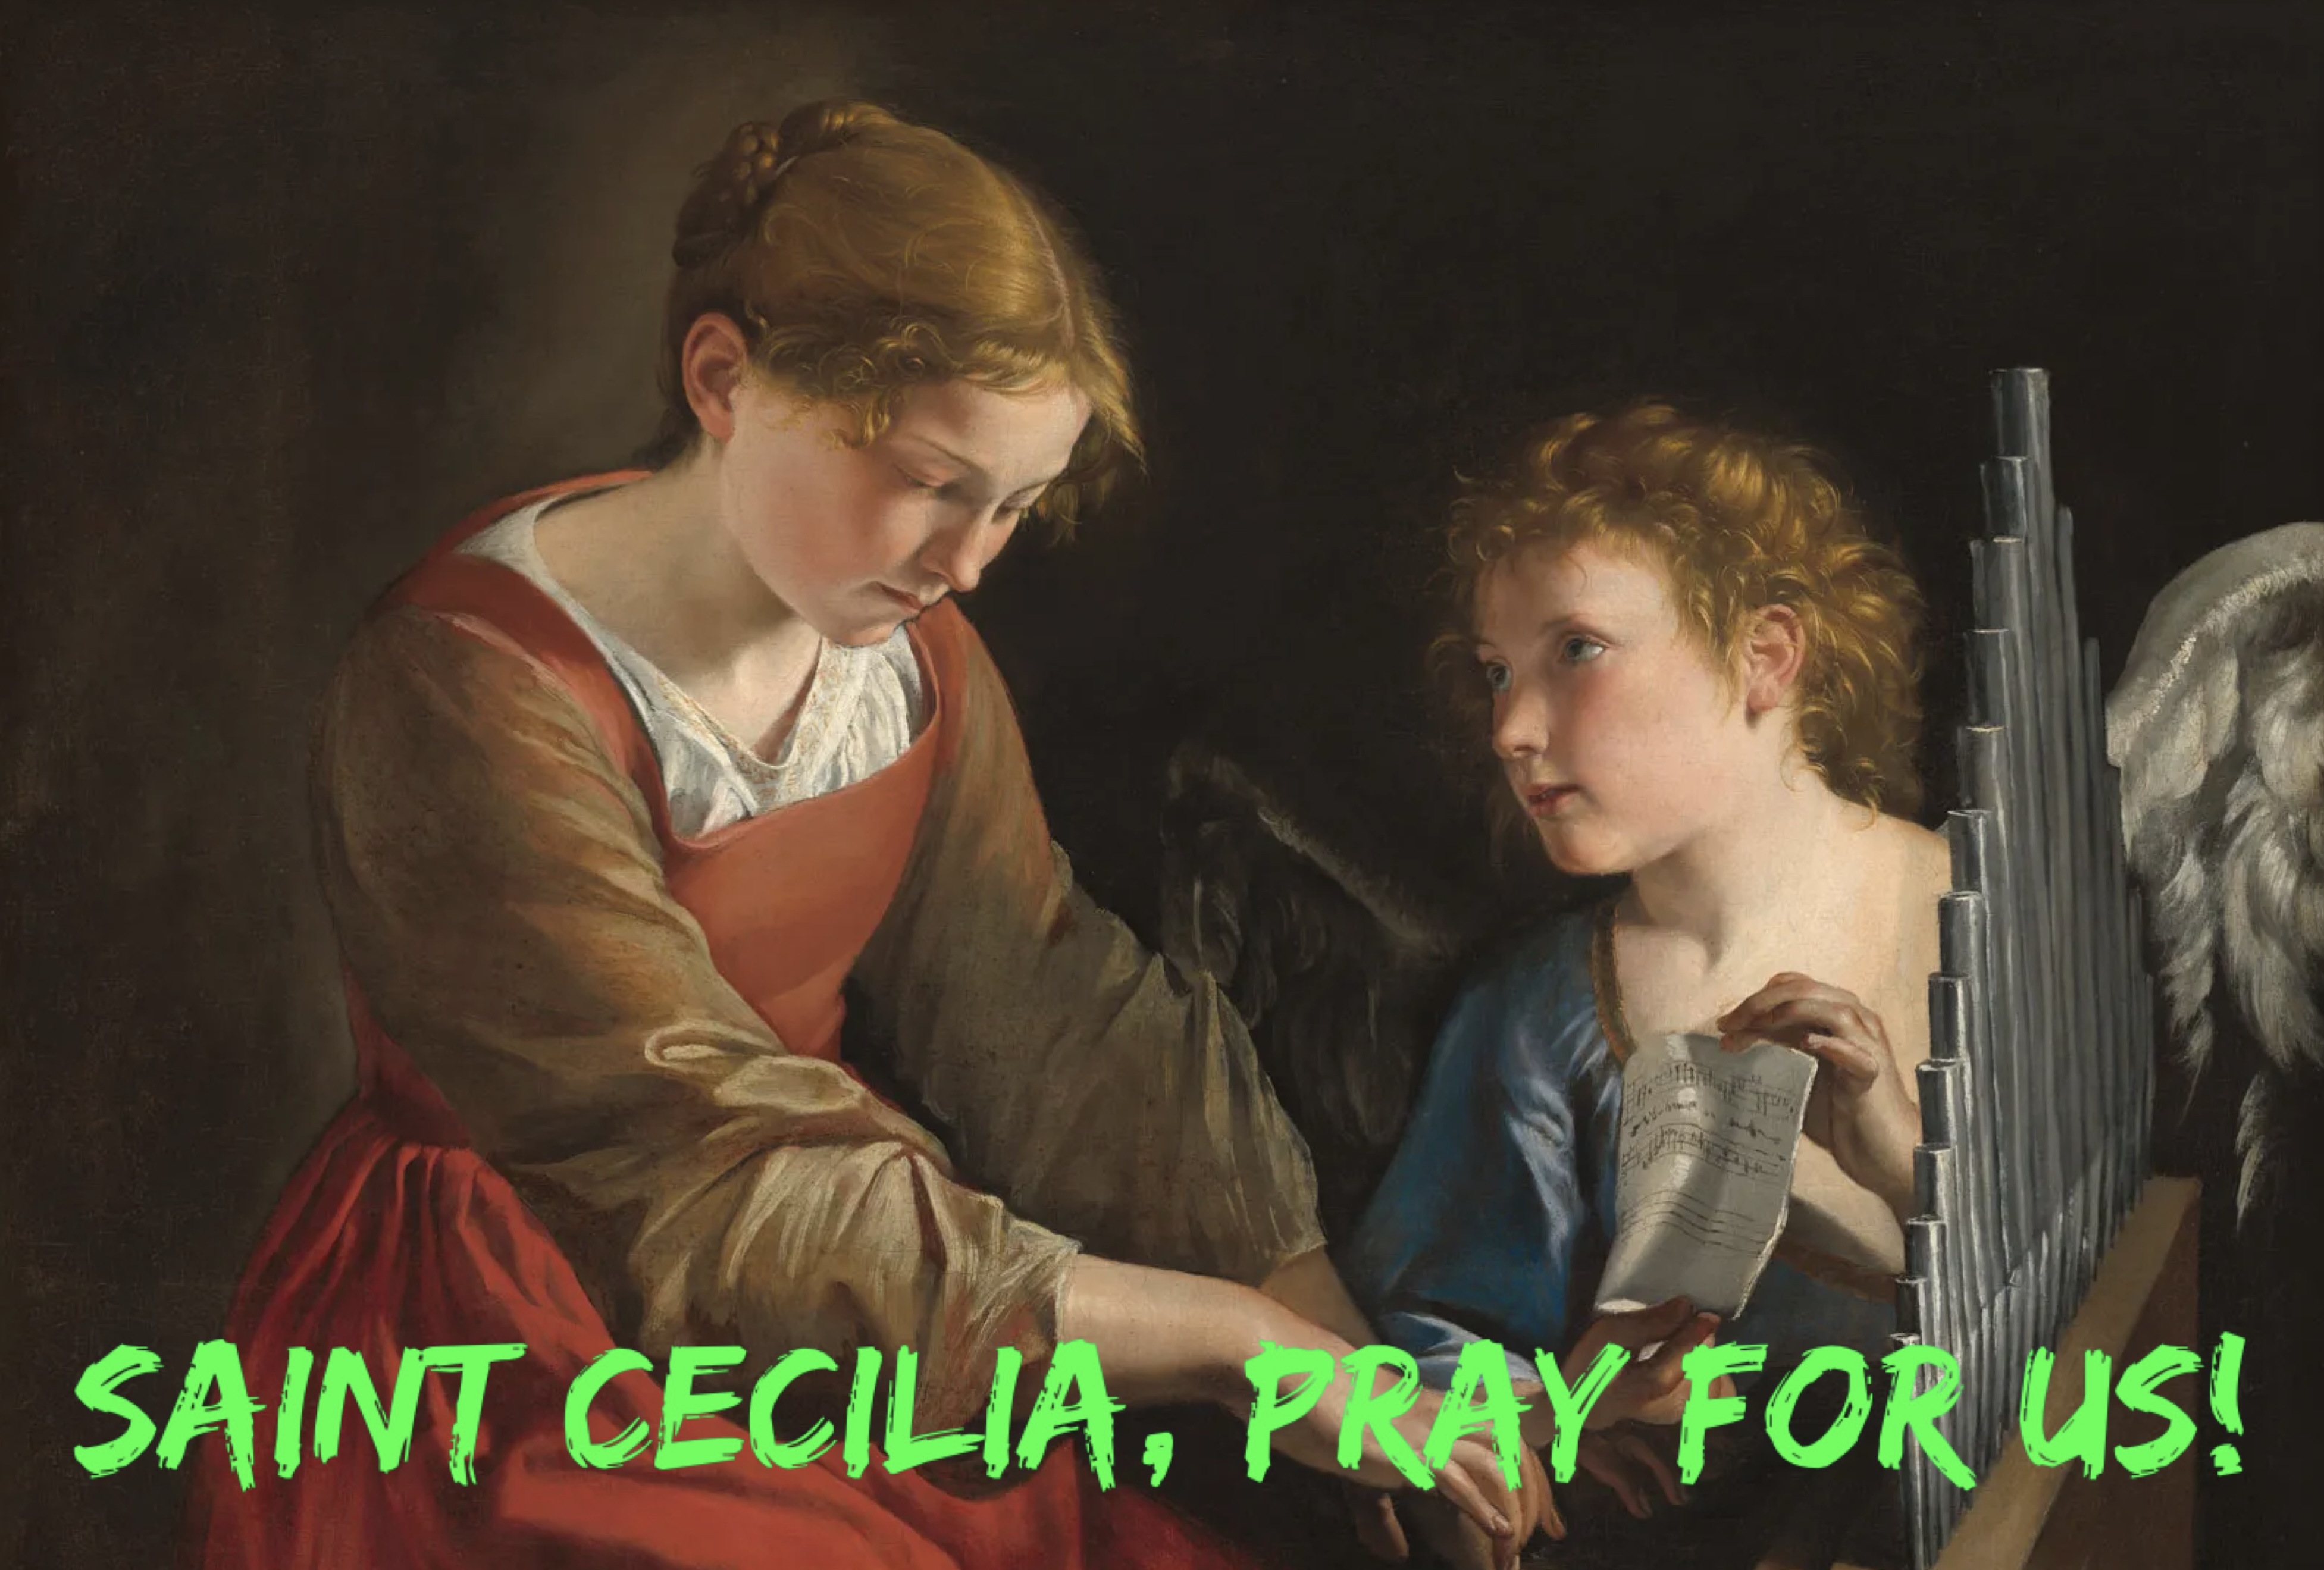 22nd November – Saint Cecilia